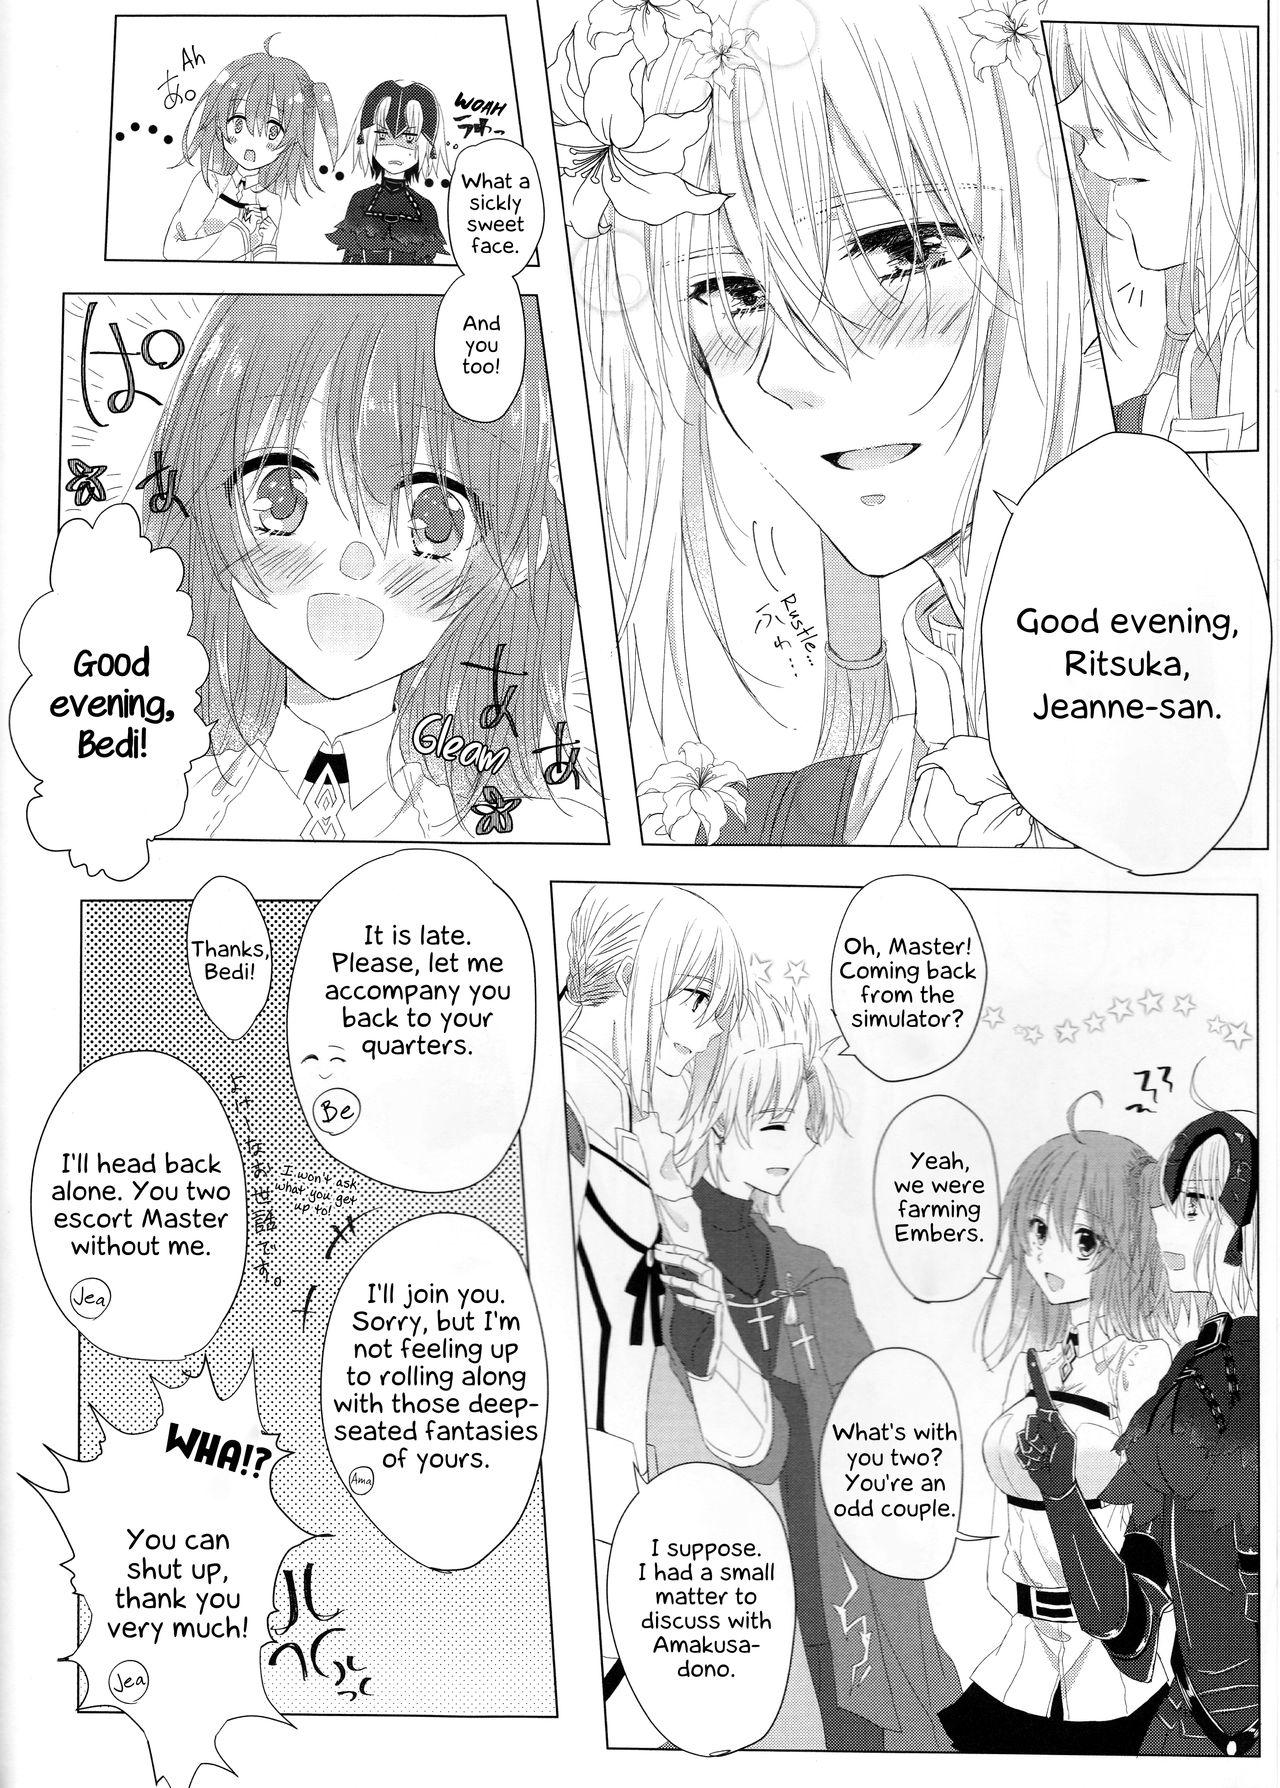 Celebrity Sex Anata no Koto ga Daisuki nanode! - Fate grand order Porn Star - Page 3